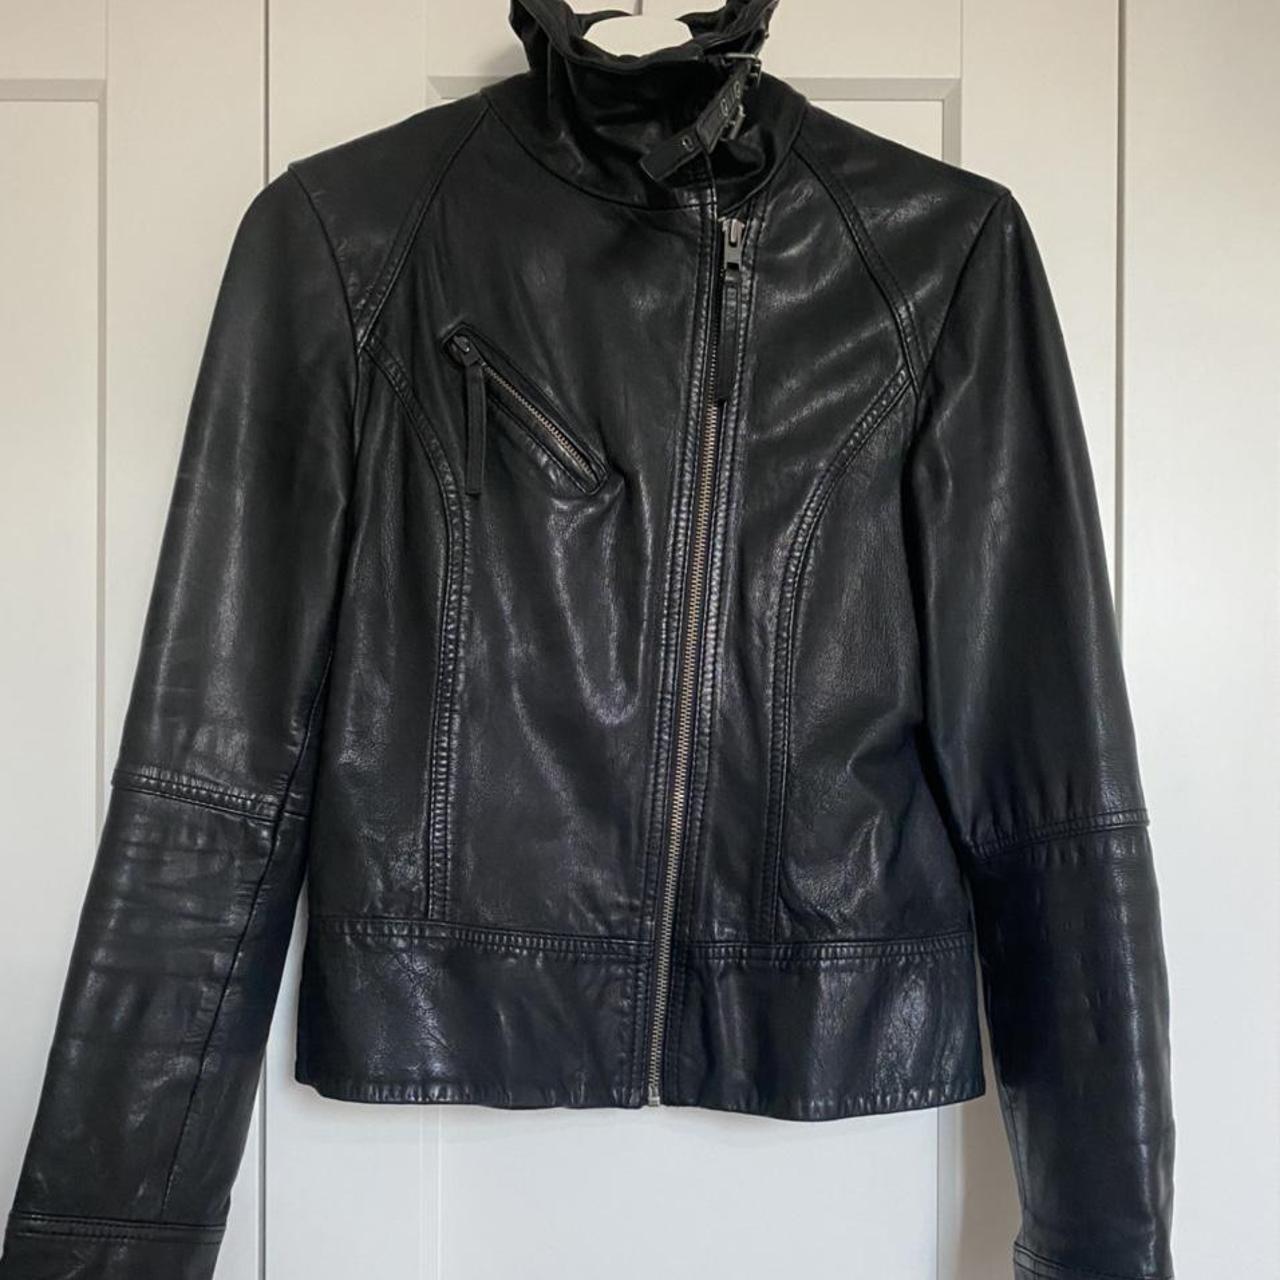 Product Image 1 - AllSaints leather jacket. Slim fit.